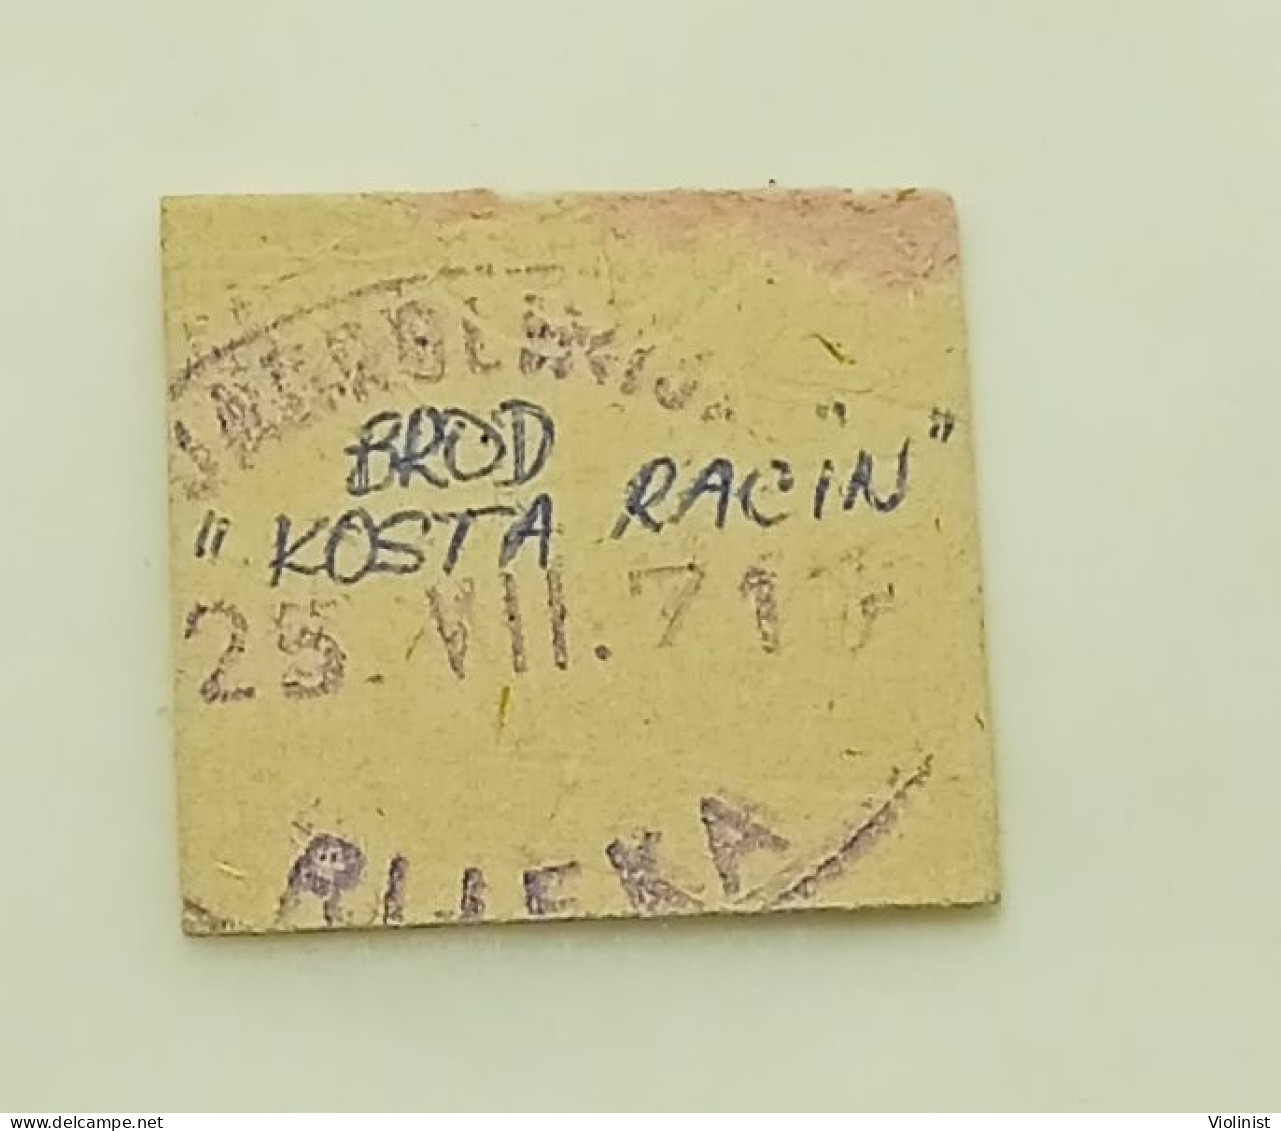 Yugoslavia (Croatia) - Half Ticket For A Trip On The Ship "Kosta Racin" From Rijeka To Cres In 1971. - Europa